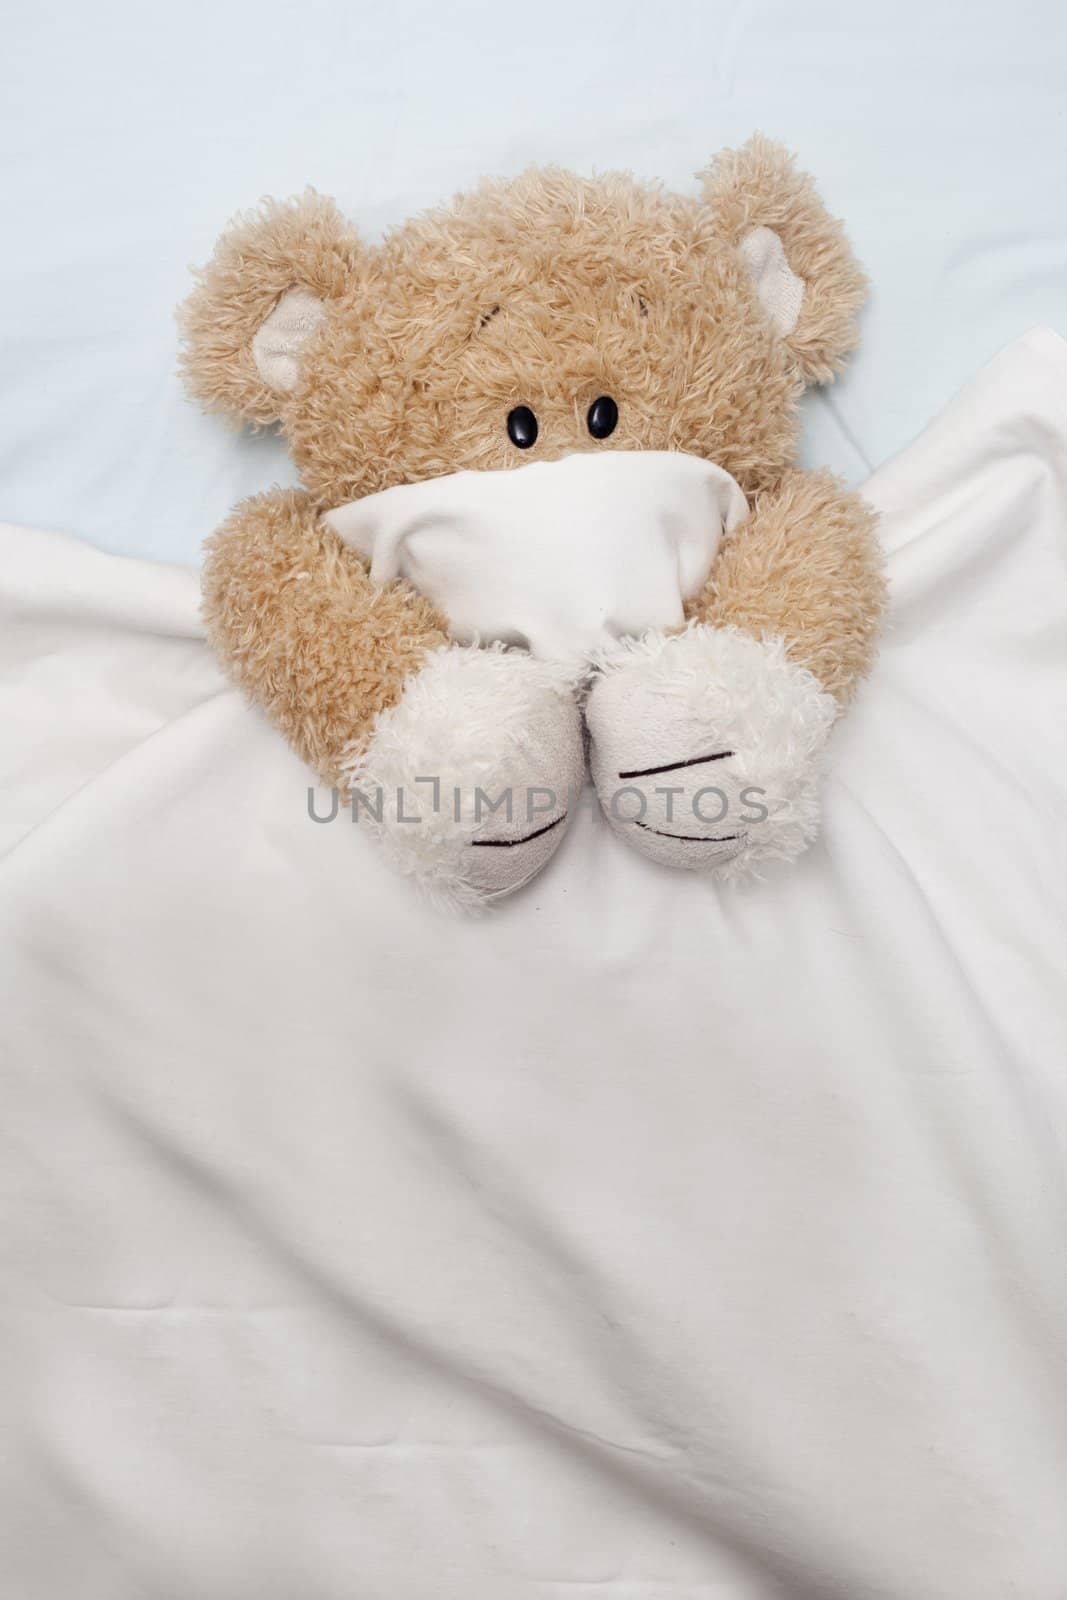 Teddy Bear Laying in Bed by Daniel_Wiedemann